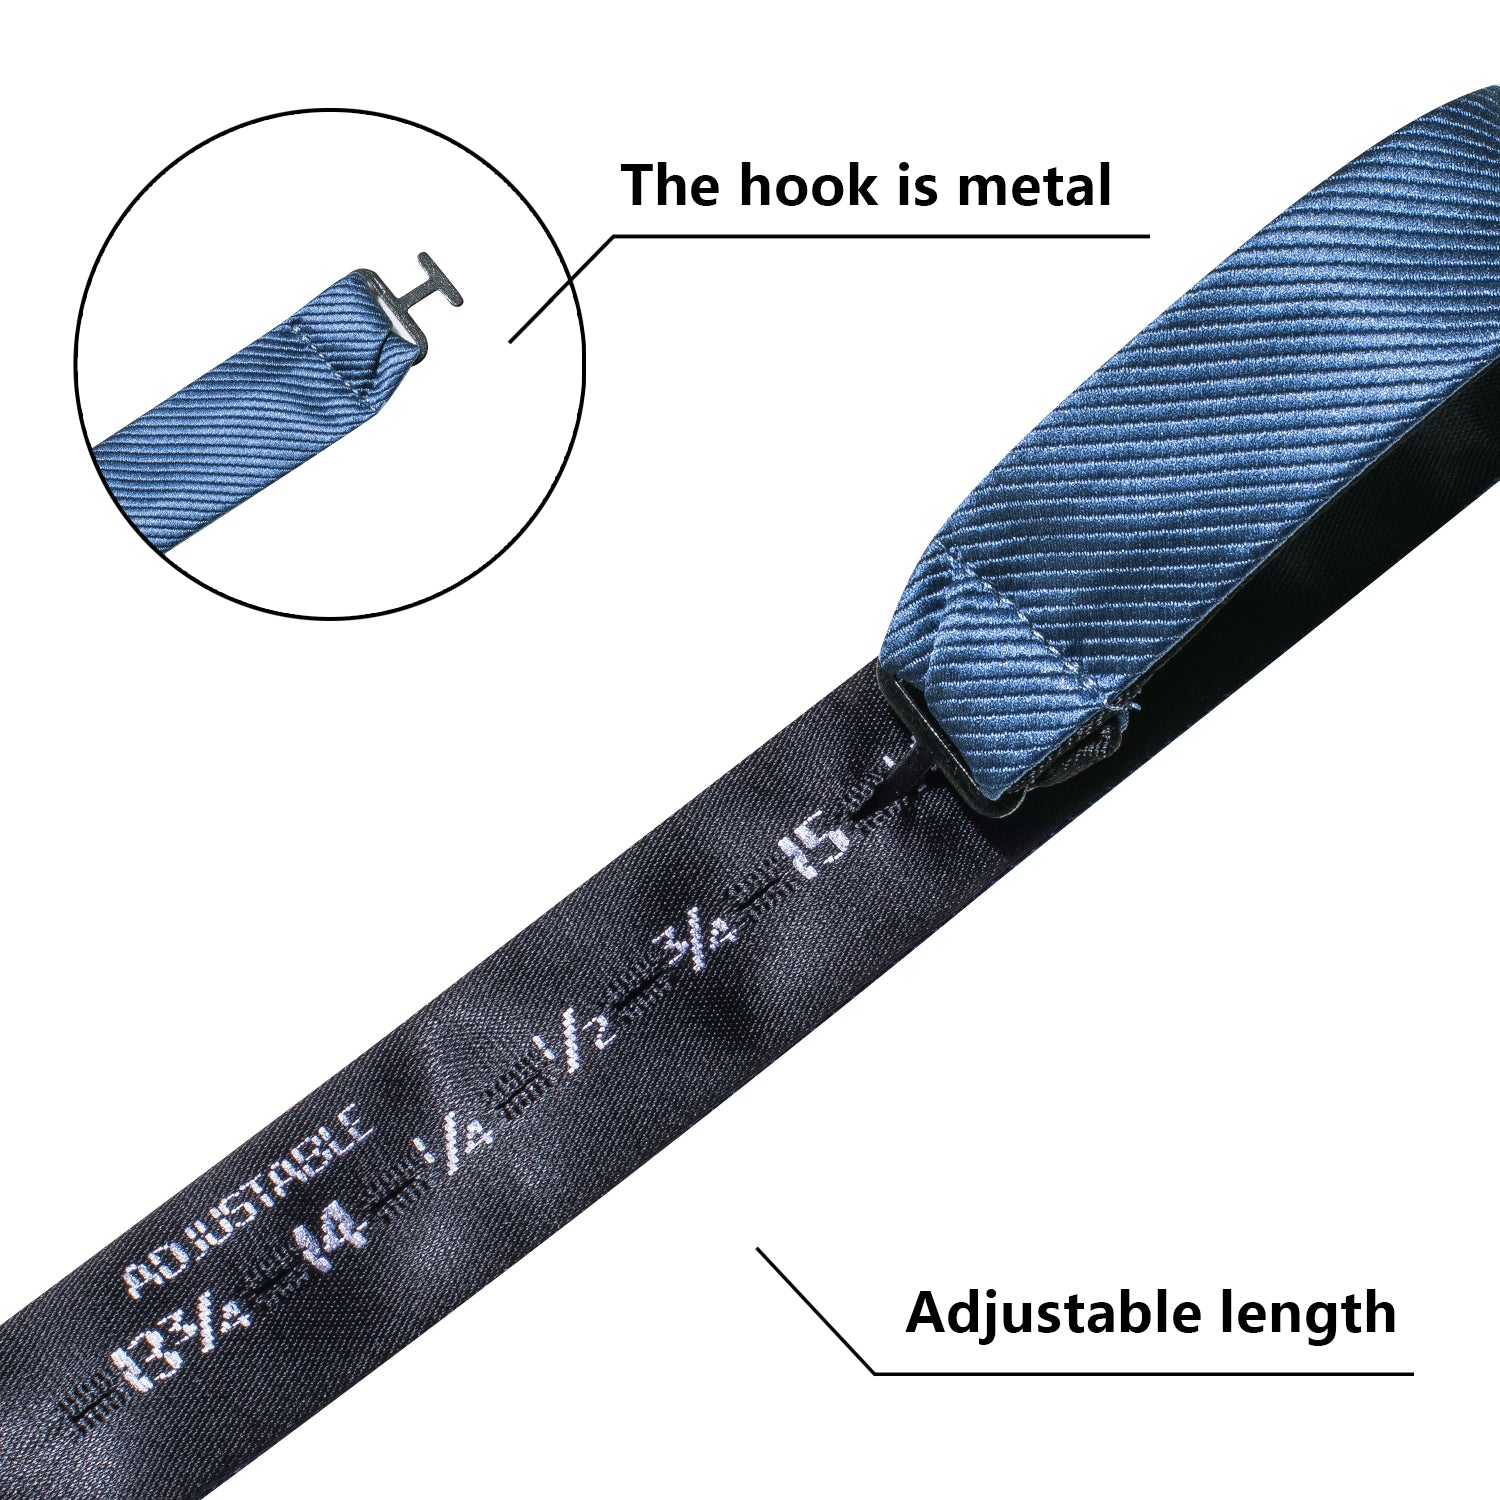 Dark Dusty Blue Striped Silk Self-tied Bow Tie Pocket Square Cufflinks Set